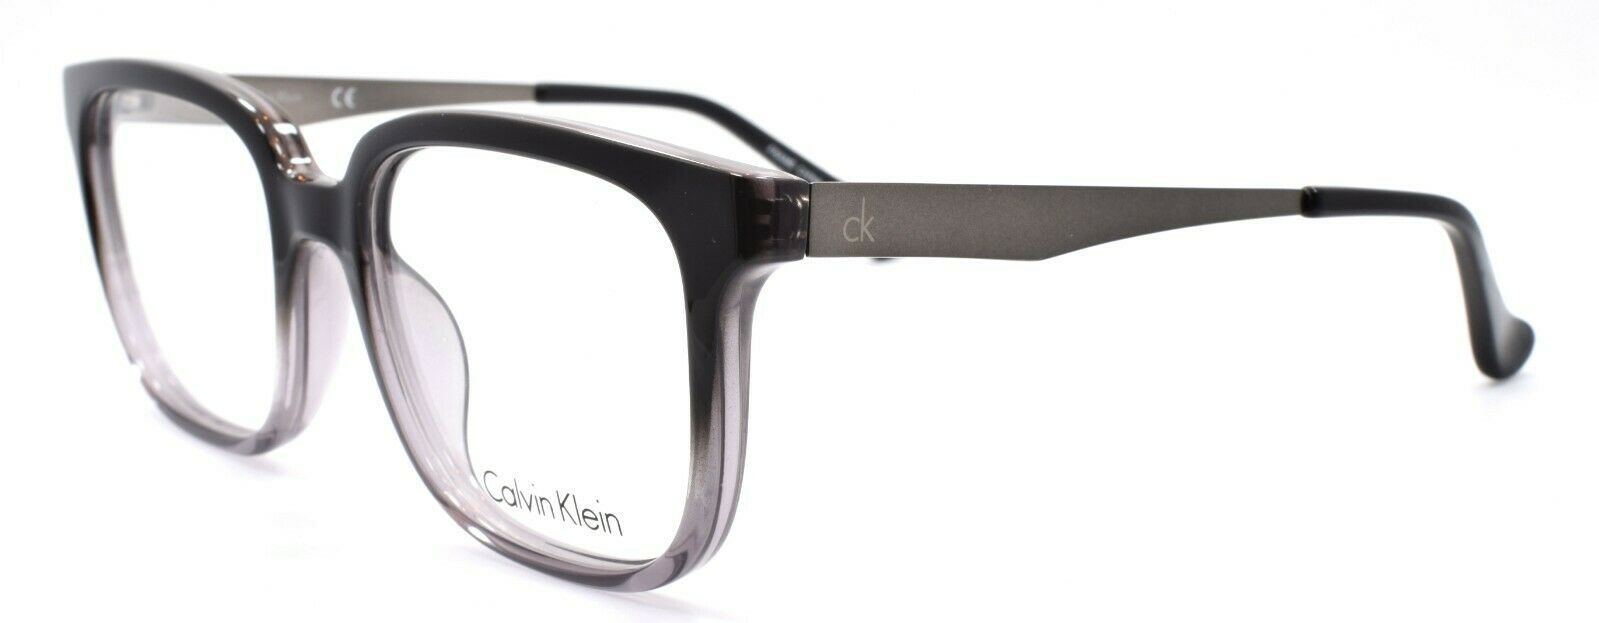 1-Calvin Klein CK5912 081 Women's Eyeglasses Frames 52-18-140 Gradient Grey-750779097304-IKSpecs